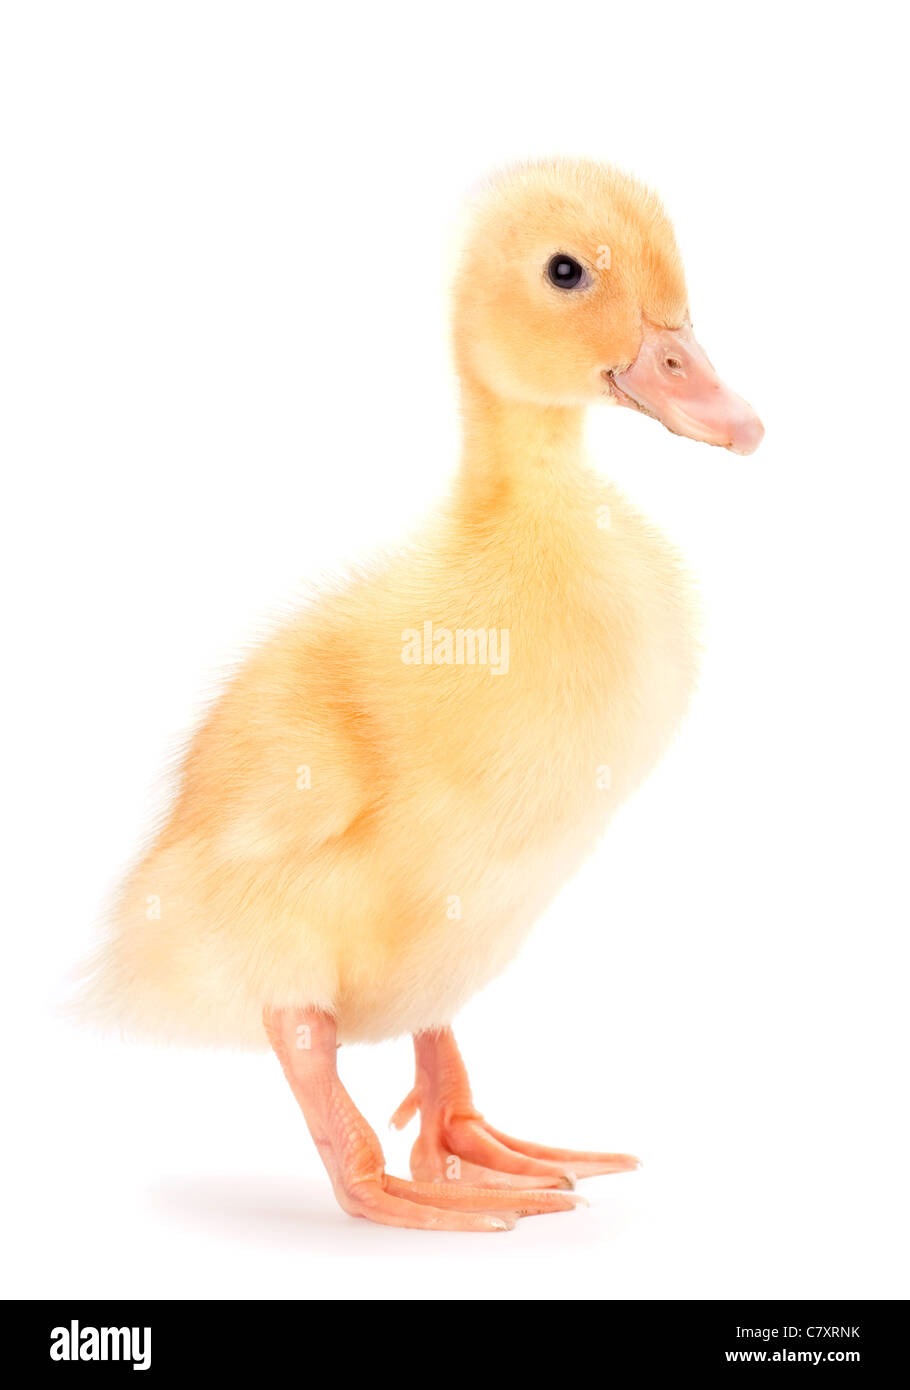 Yellow baby duck on white background Stock Photo